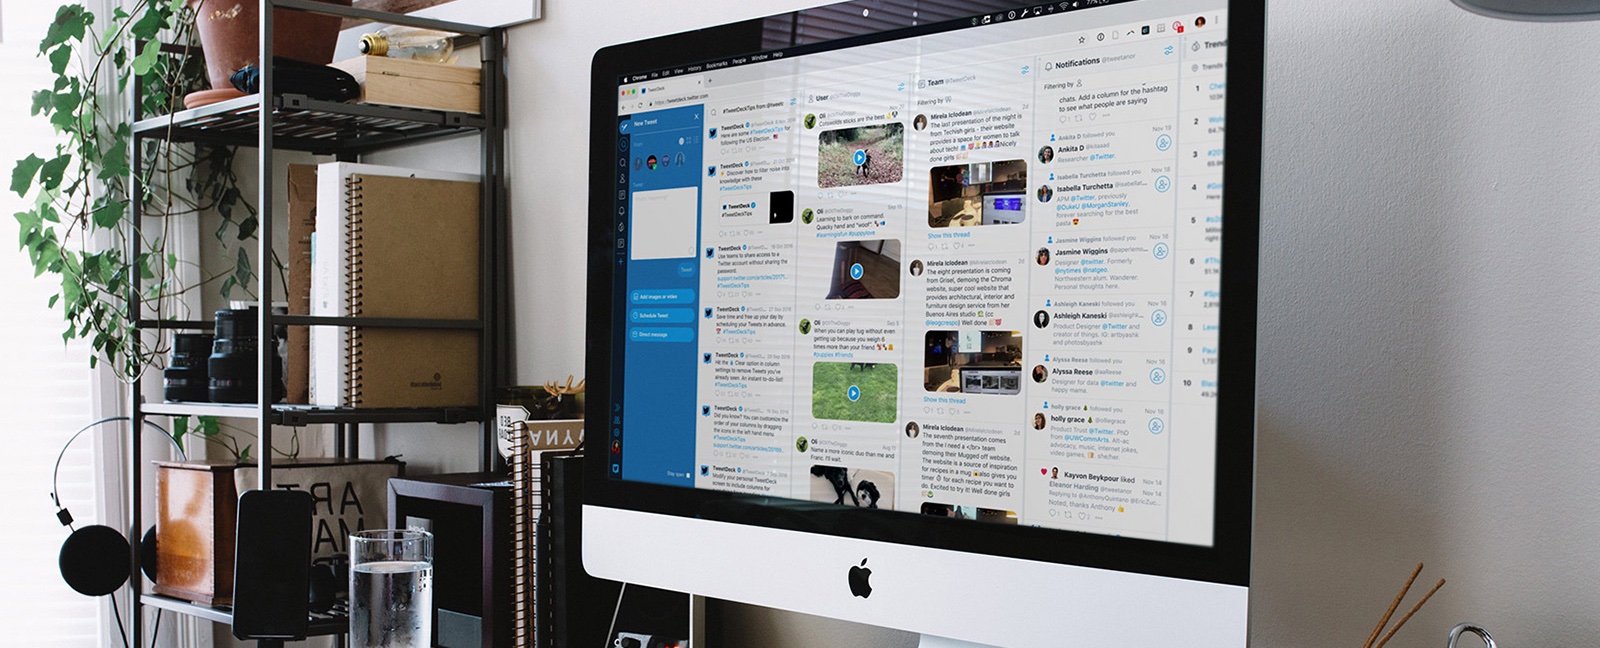 A photograph showing TweetDeck running on an iMac lying on on a work desk